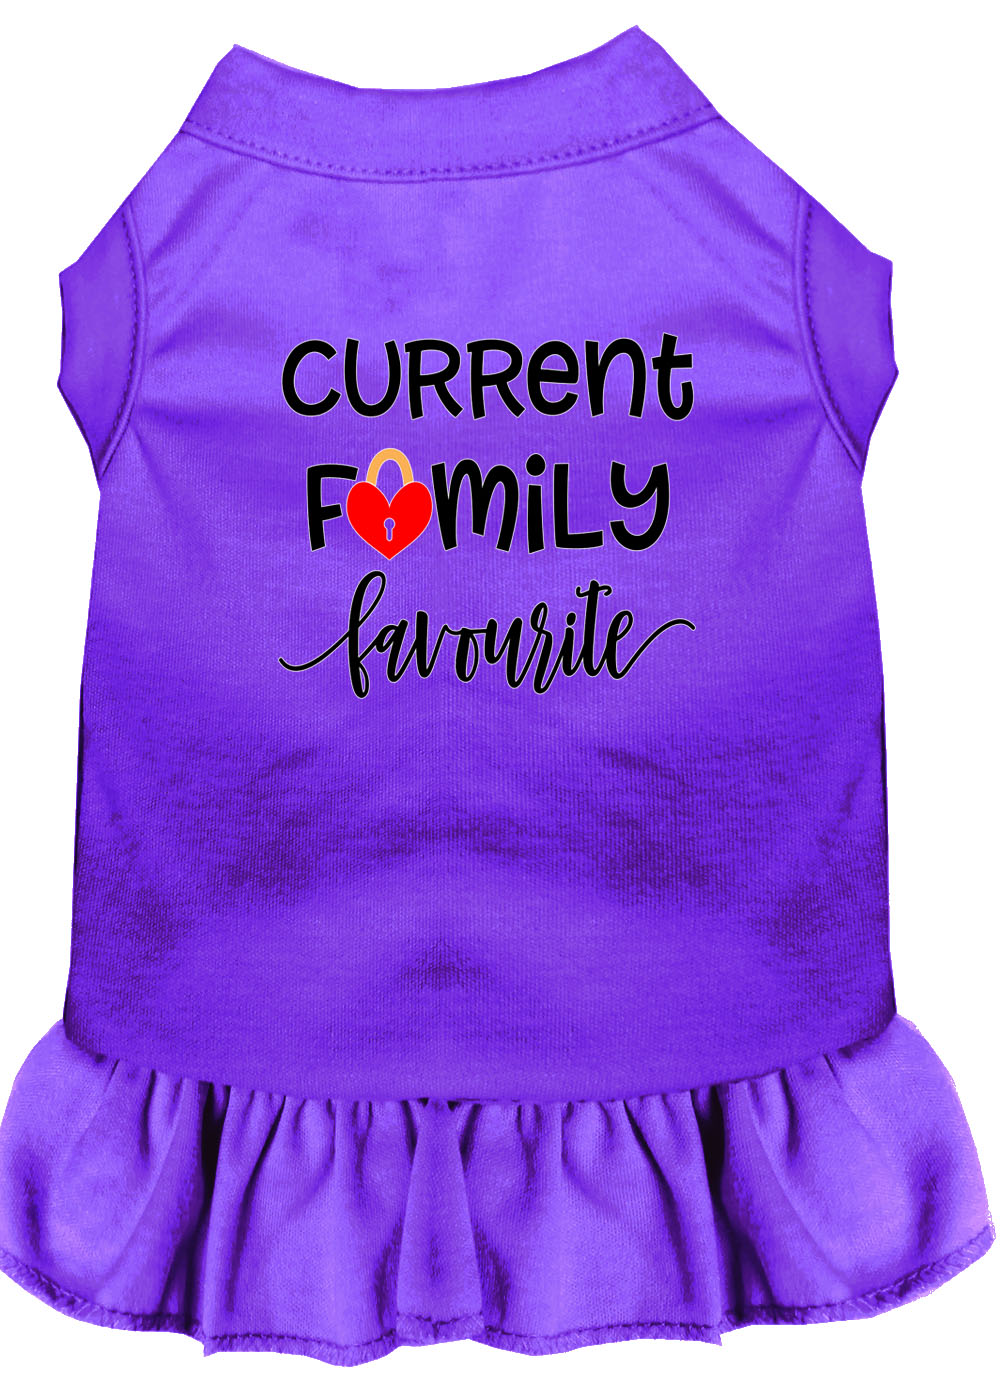 Family Favorite Screen Print Dog Dress Purple XXXL